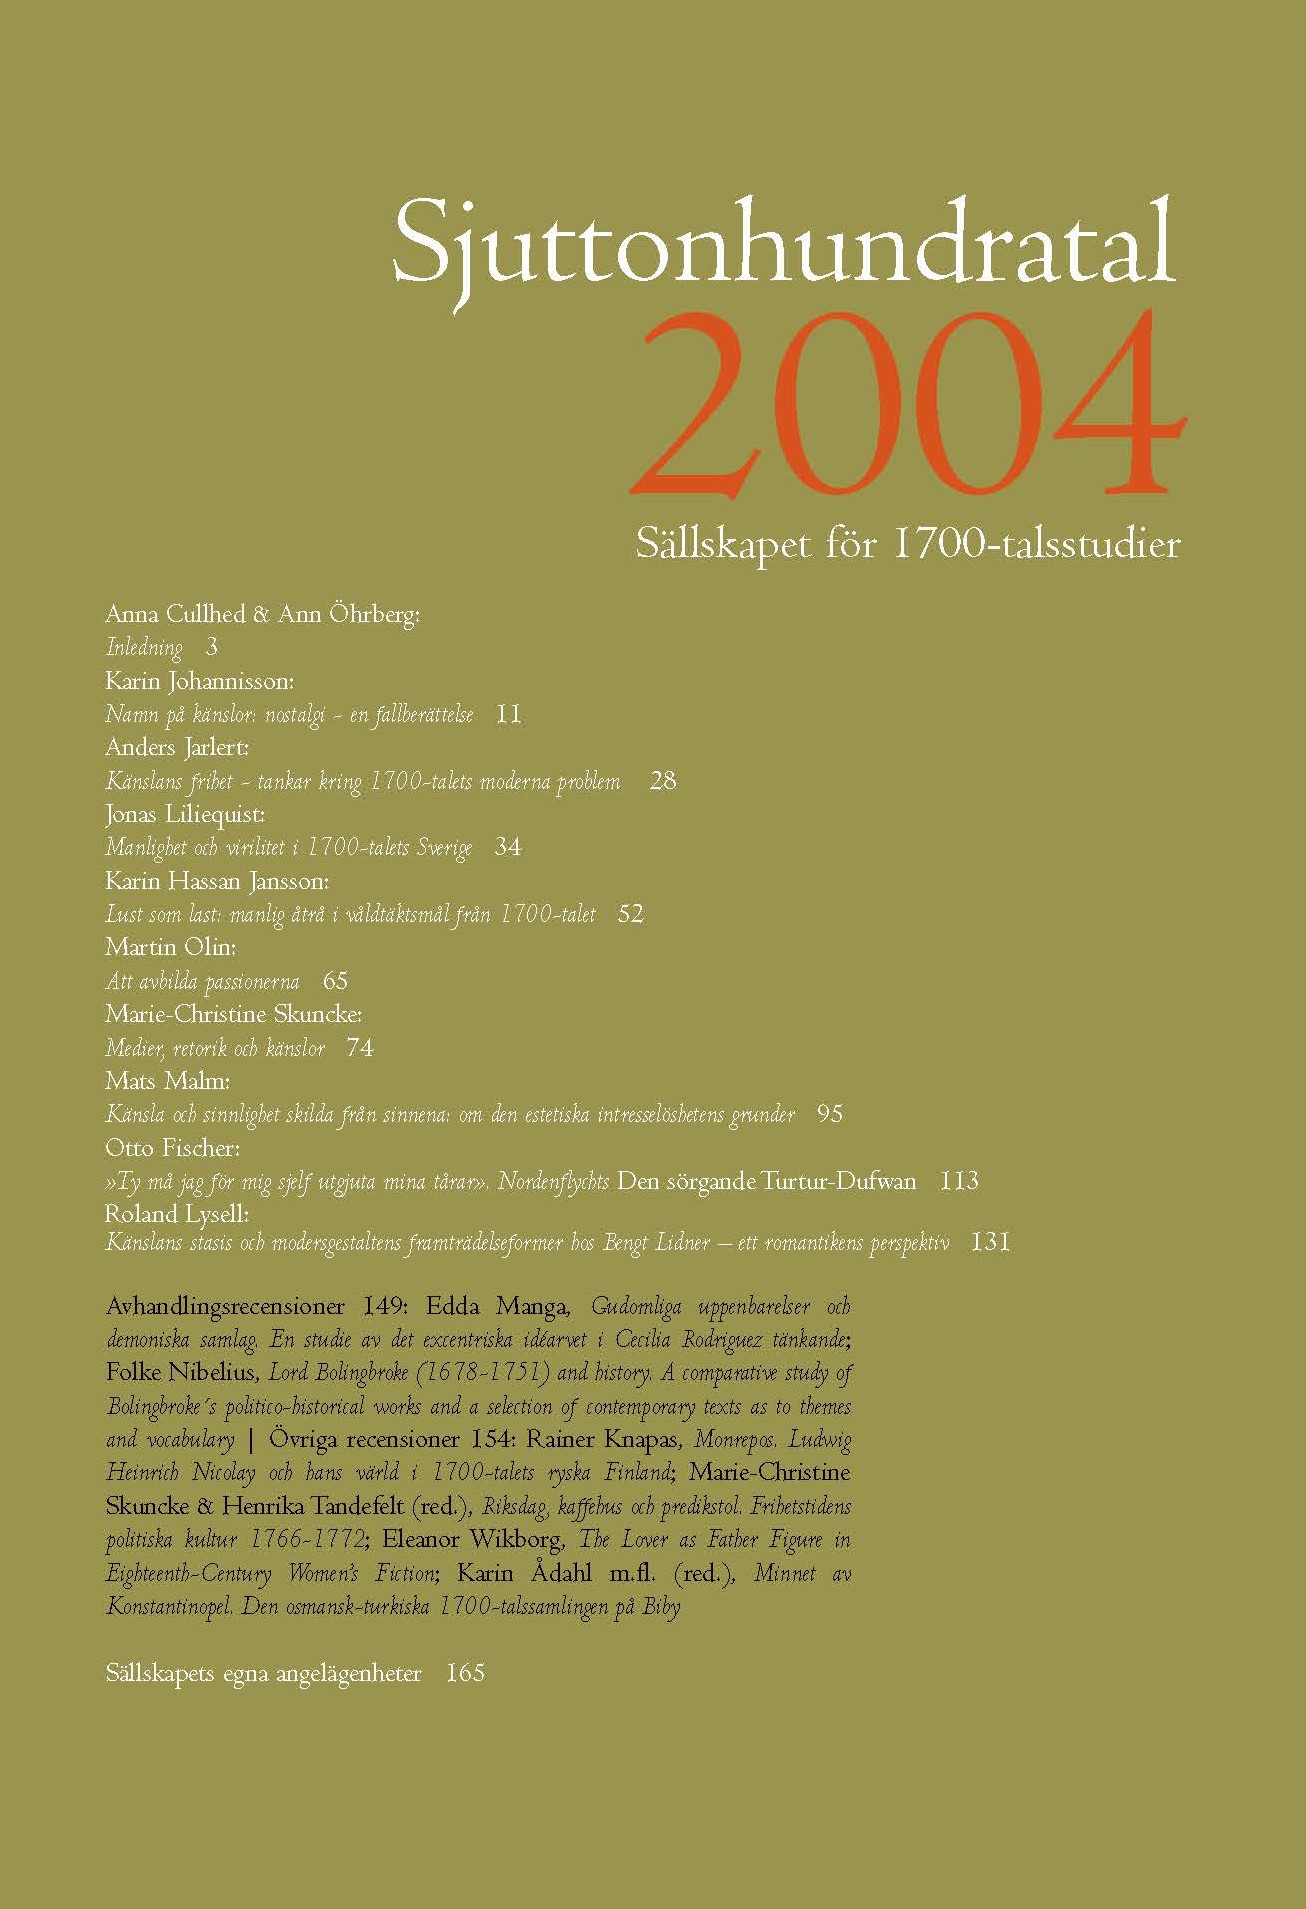 Frontcover of Sjuttonhundratal 2004.